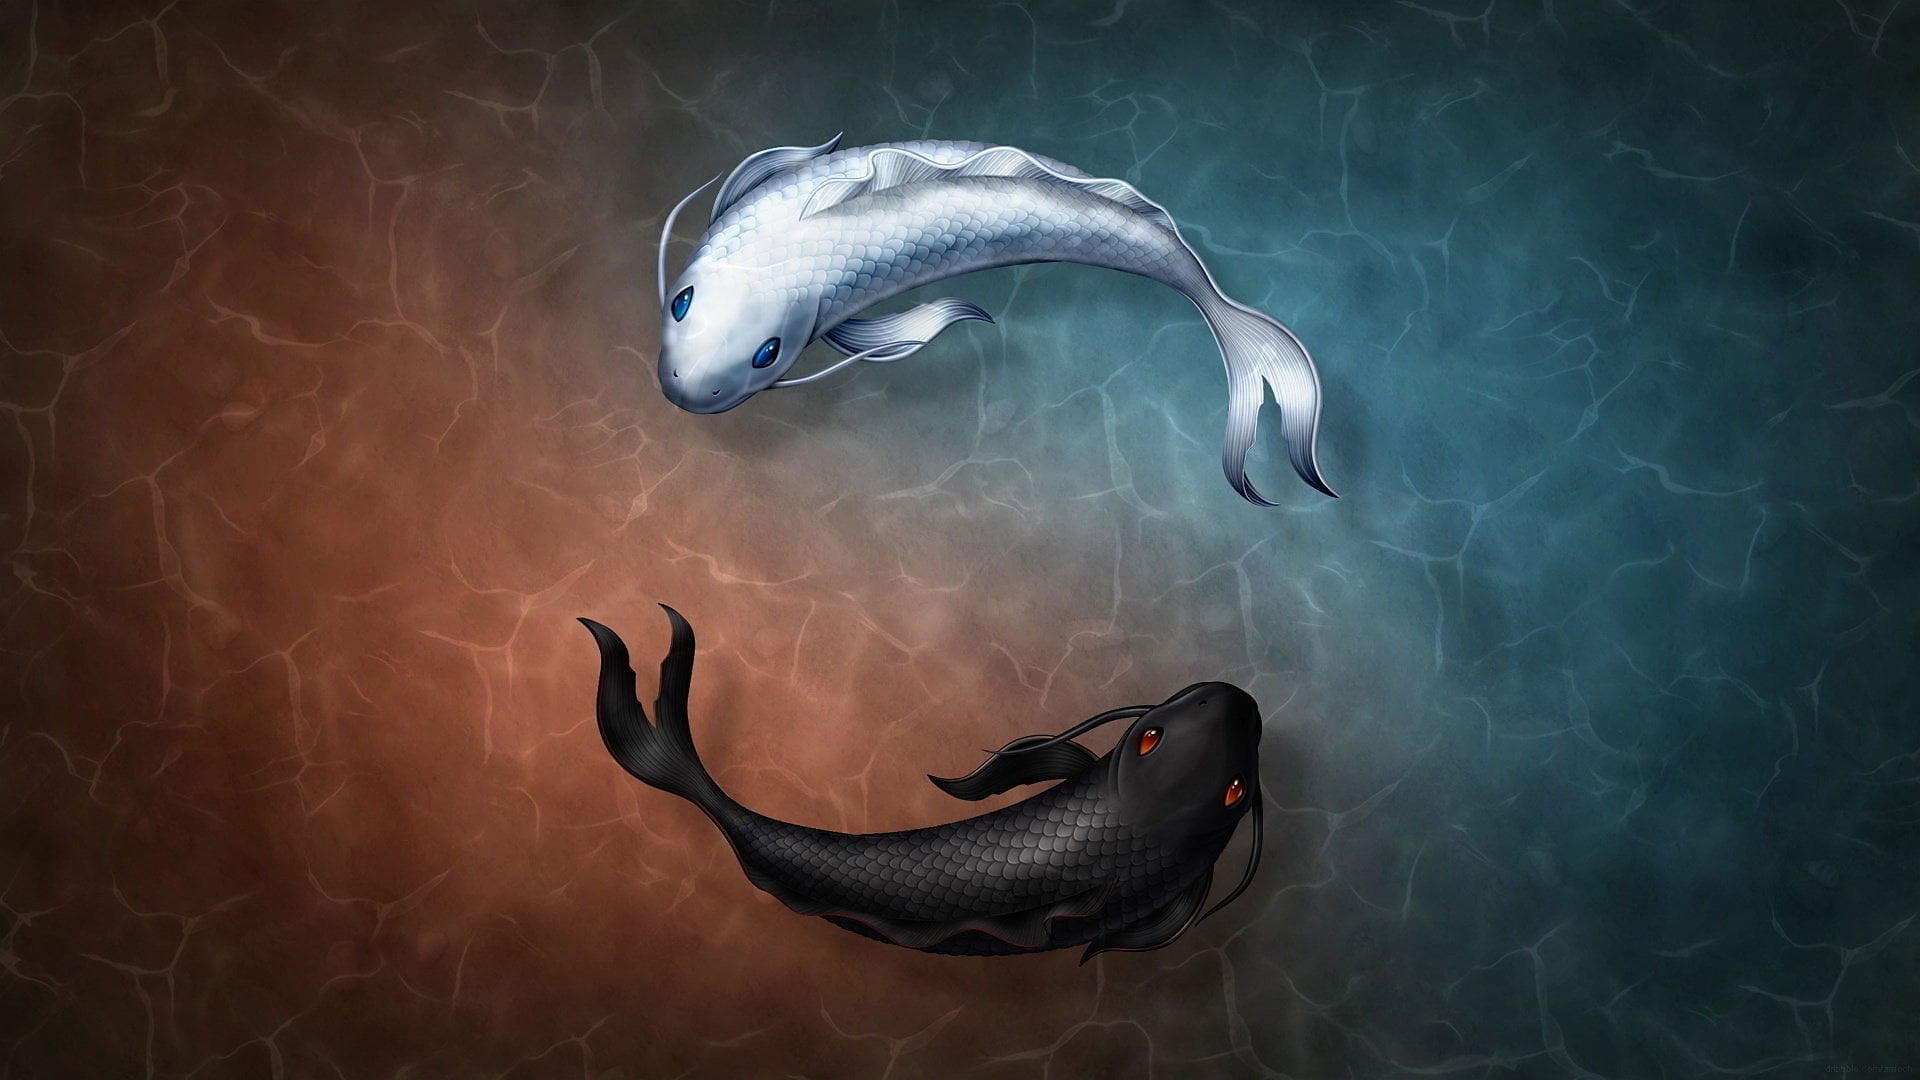 Wallpaper Black And White Coy Fishes Illustration